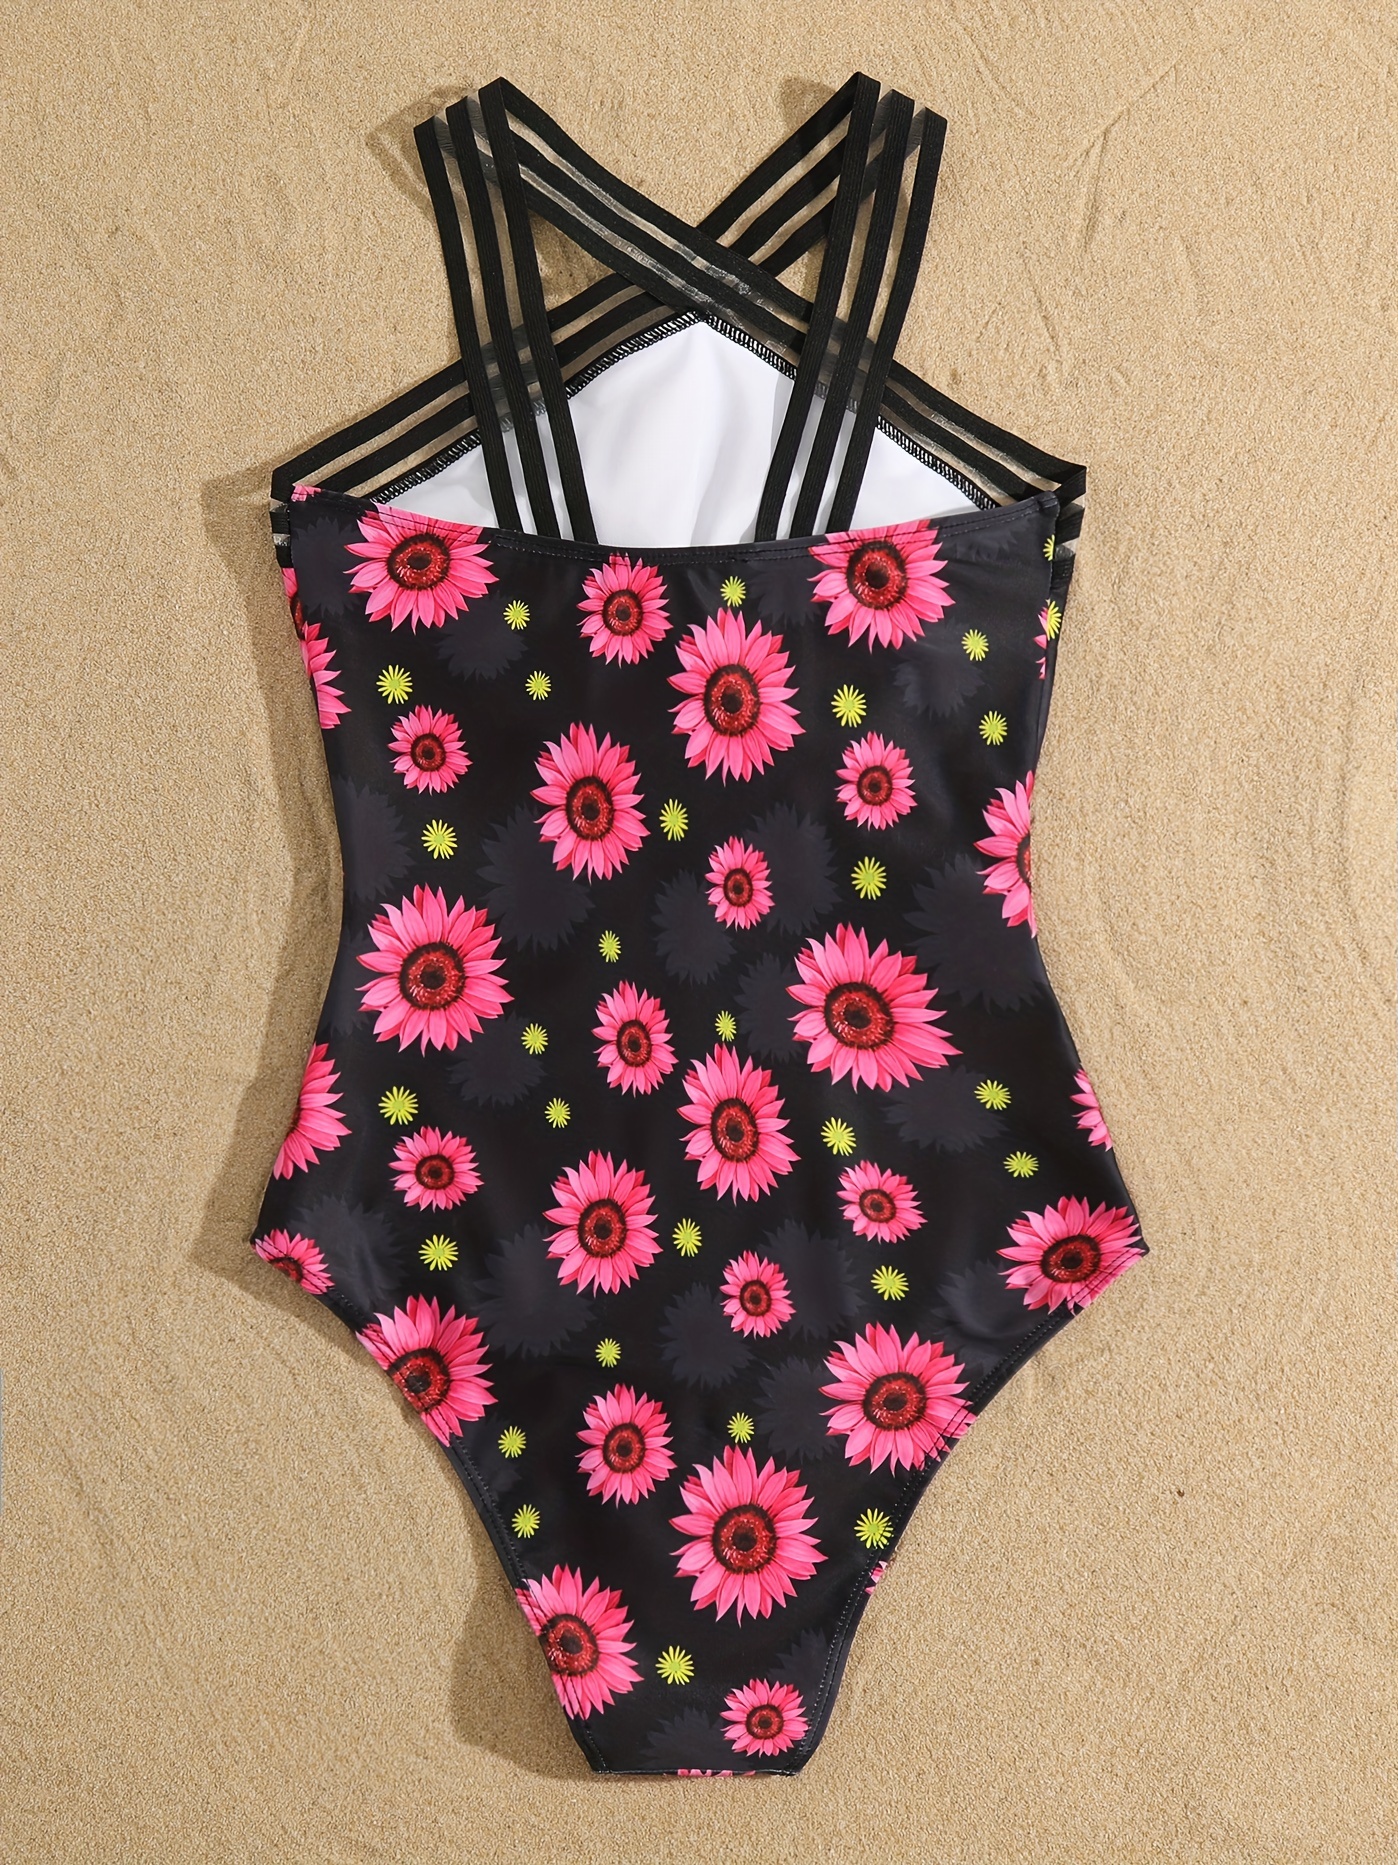 * Sunflower Mesh Wrap Monokinis for Women and Girls - Matching Mom &  Daughter Swimwear - Perfect for Beach Vacations